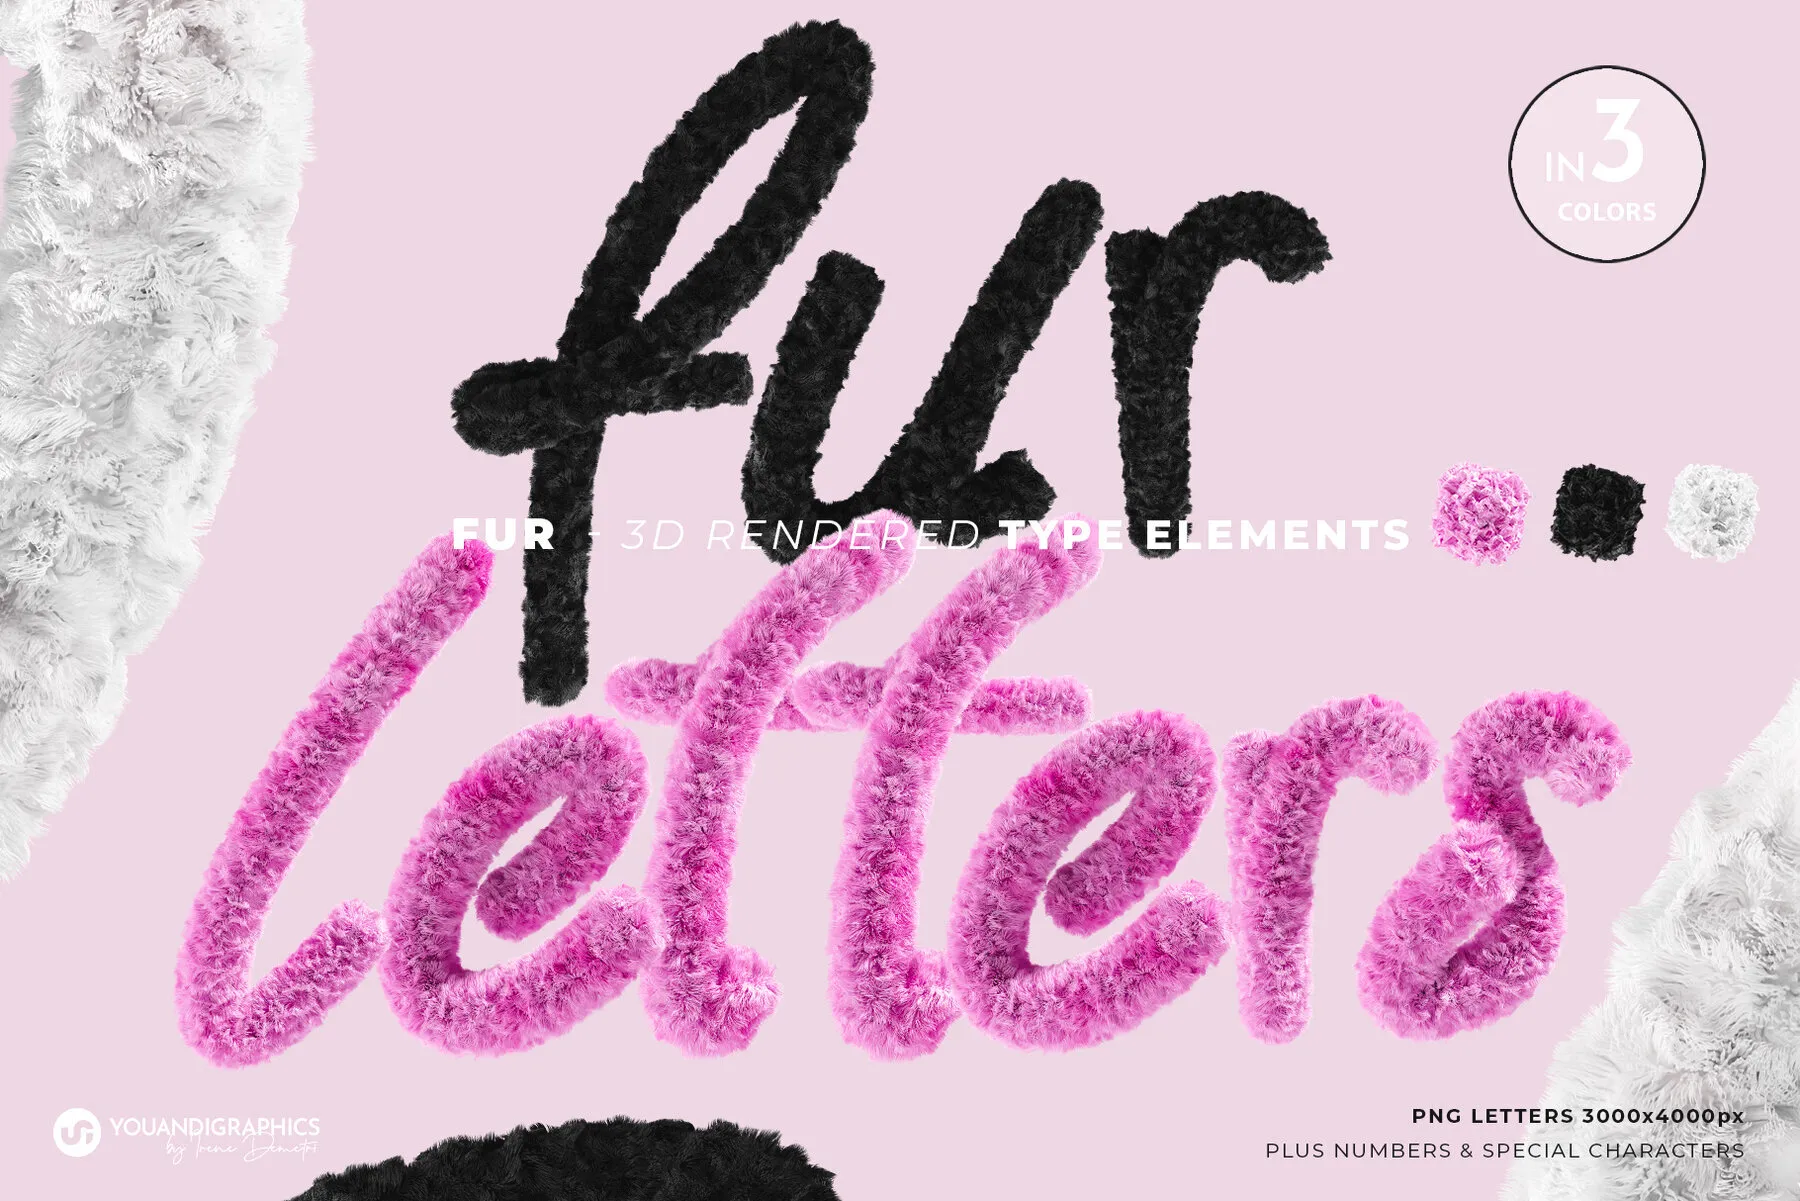 Fur 3D Lettering Set